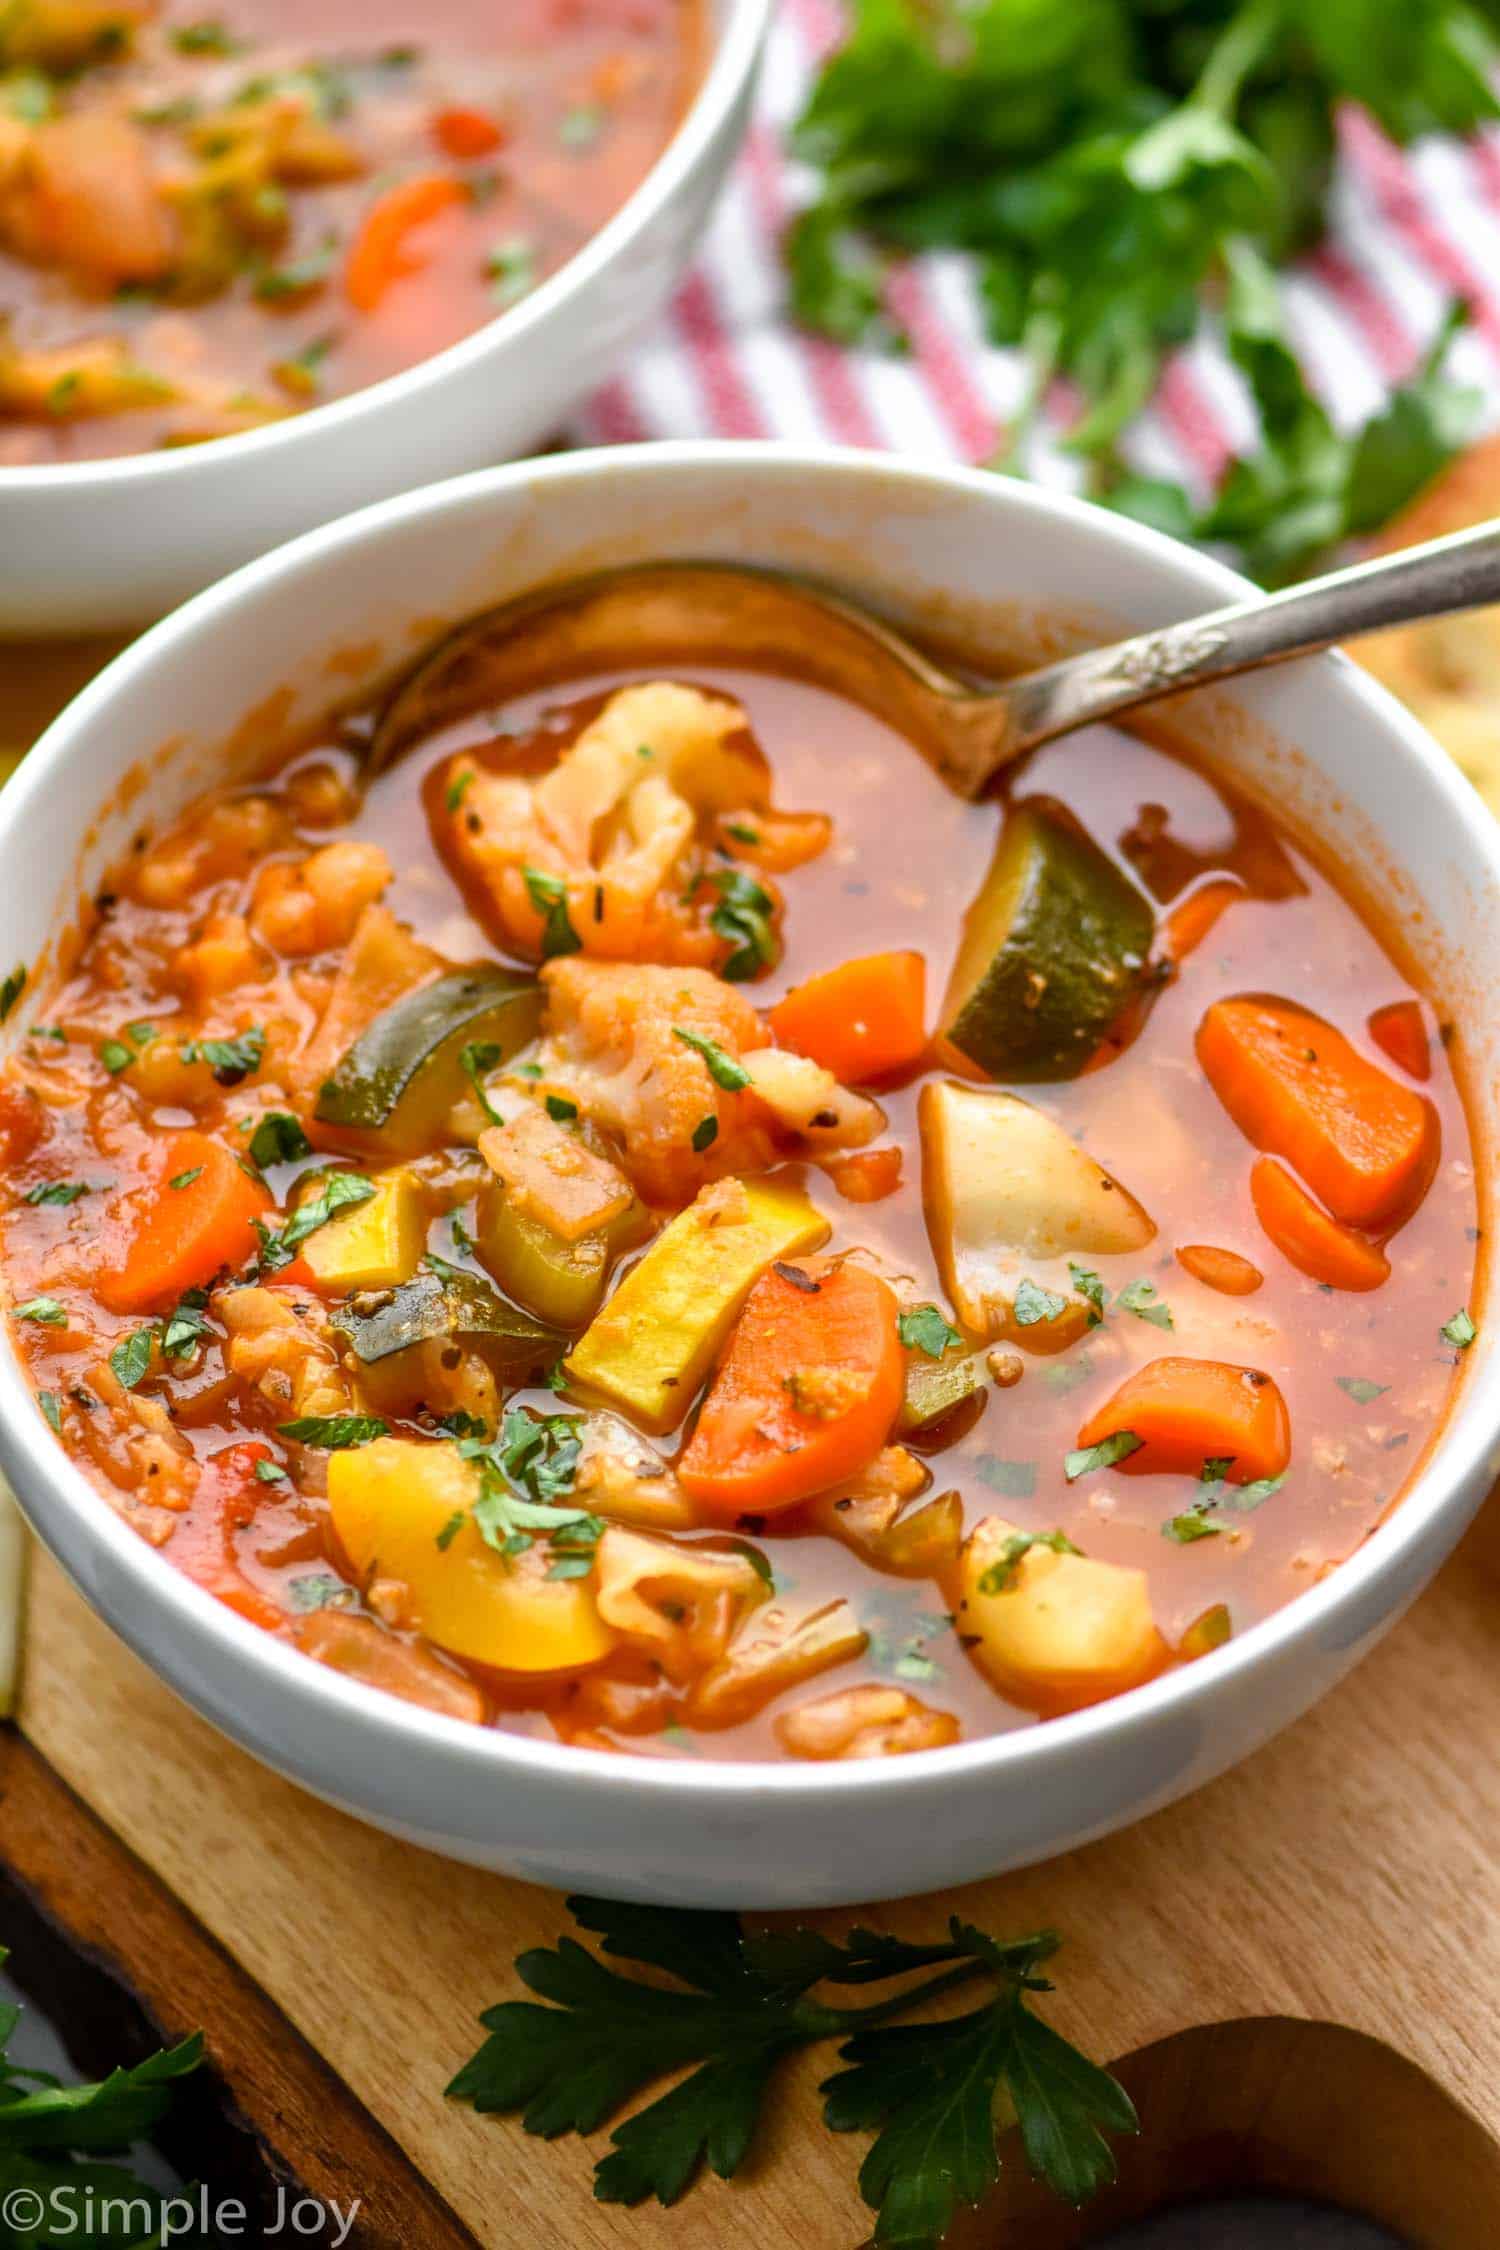 https://www.simplejoy.com/wp-content/uploads/2021/01/instant-pot-vegetable-soup.jpg